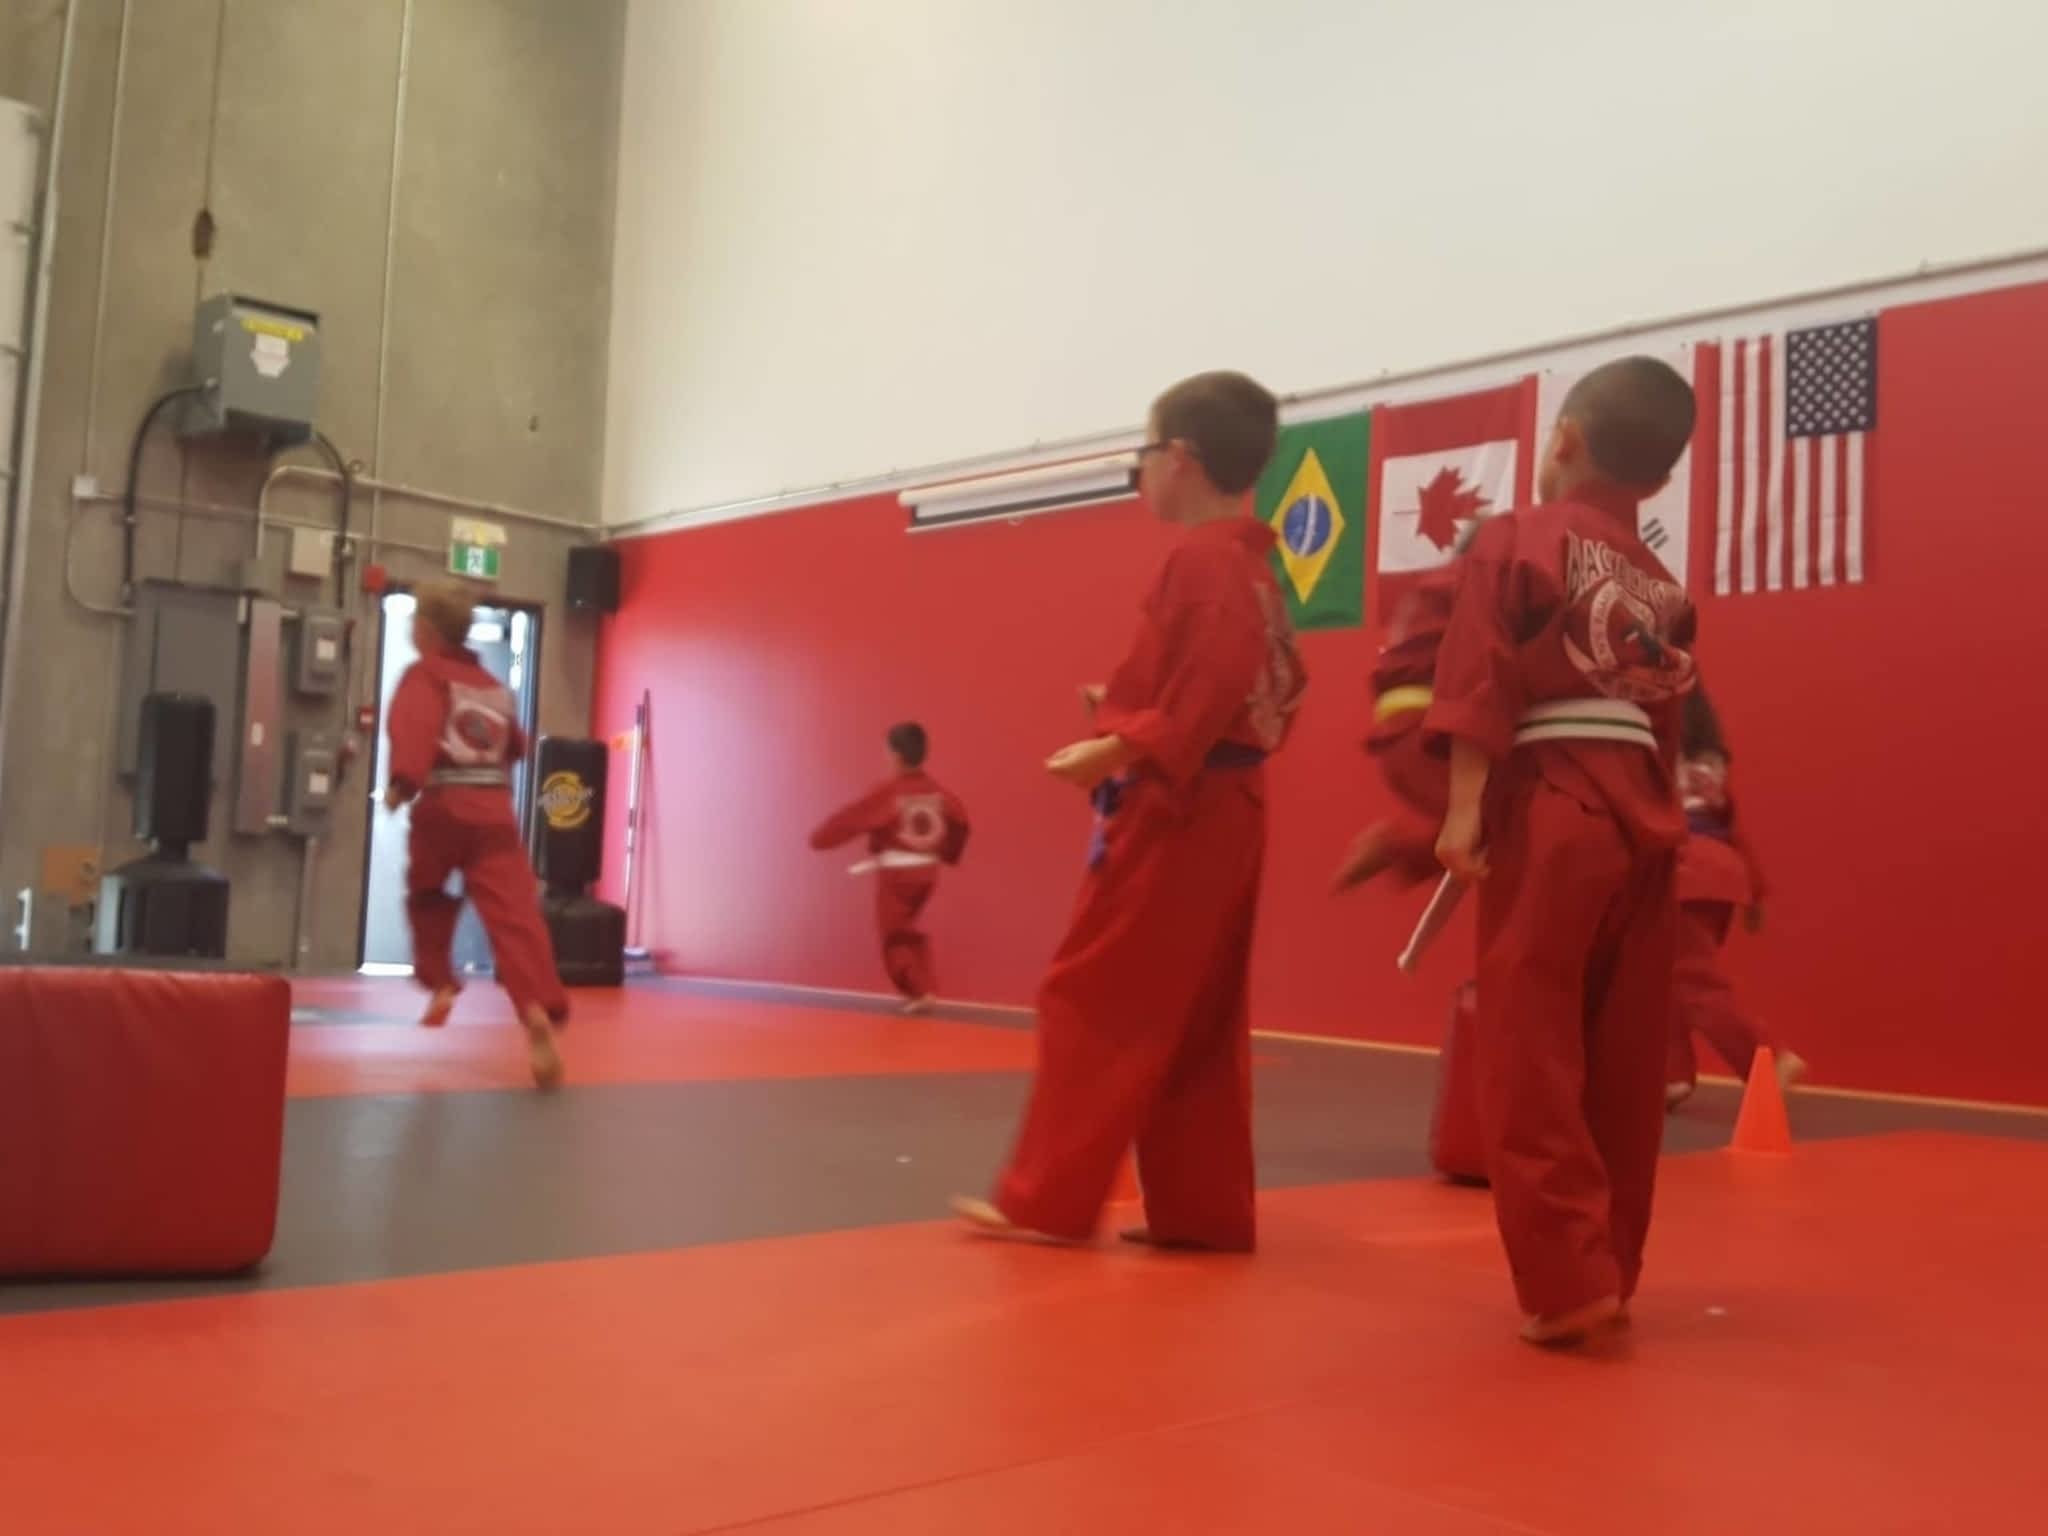 photo Freemont Martial Arts Training Centre